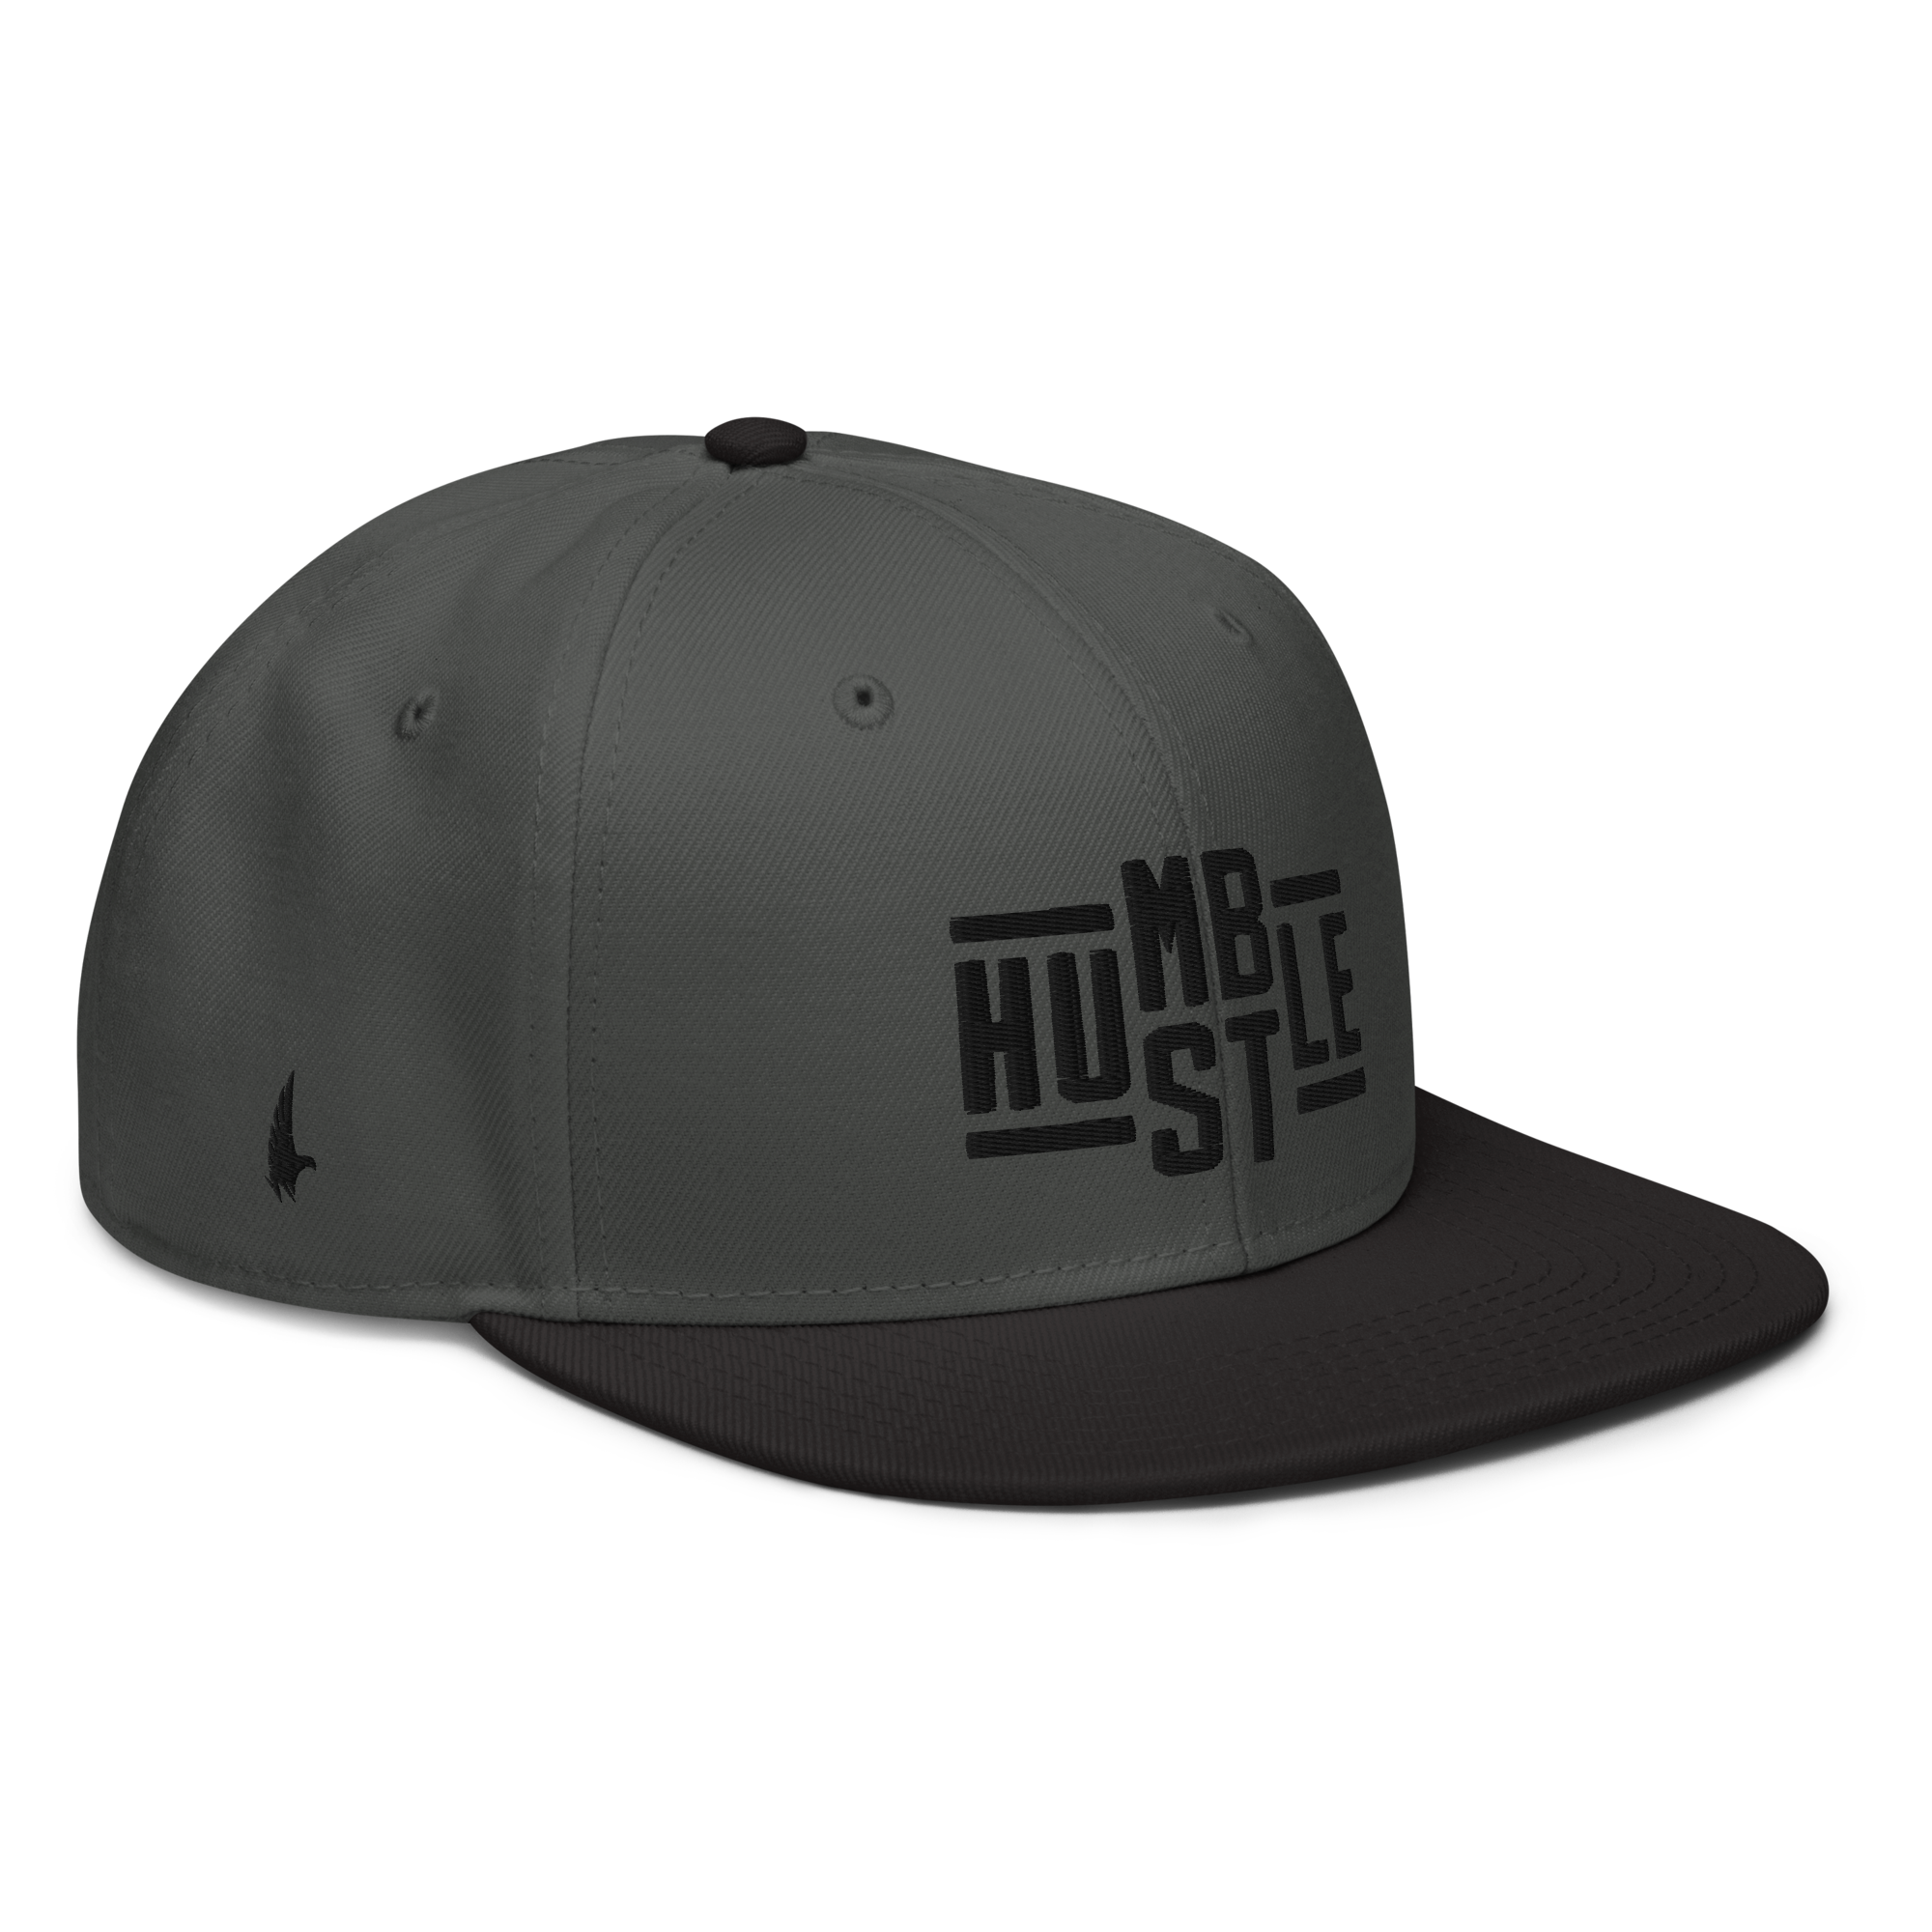 Hustle Snapback Hat - Charcoal Gray/Black/Black OS - Loyalty Vibes